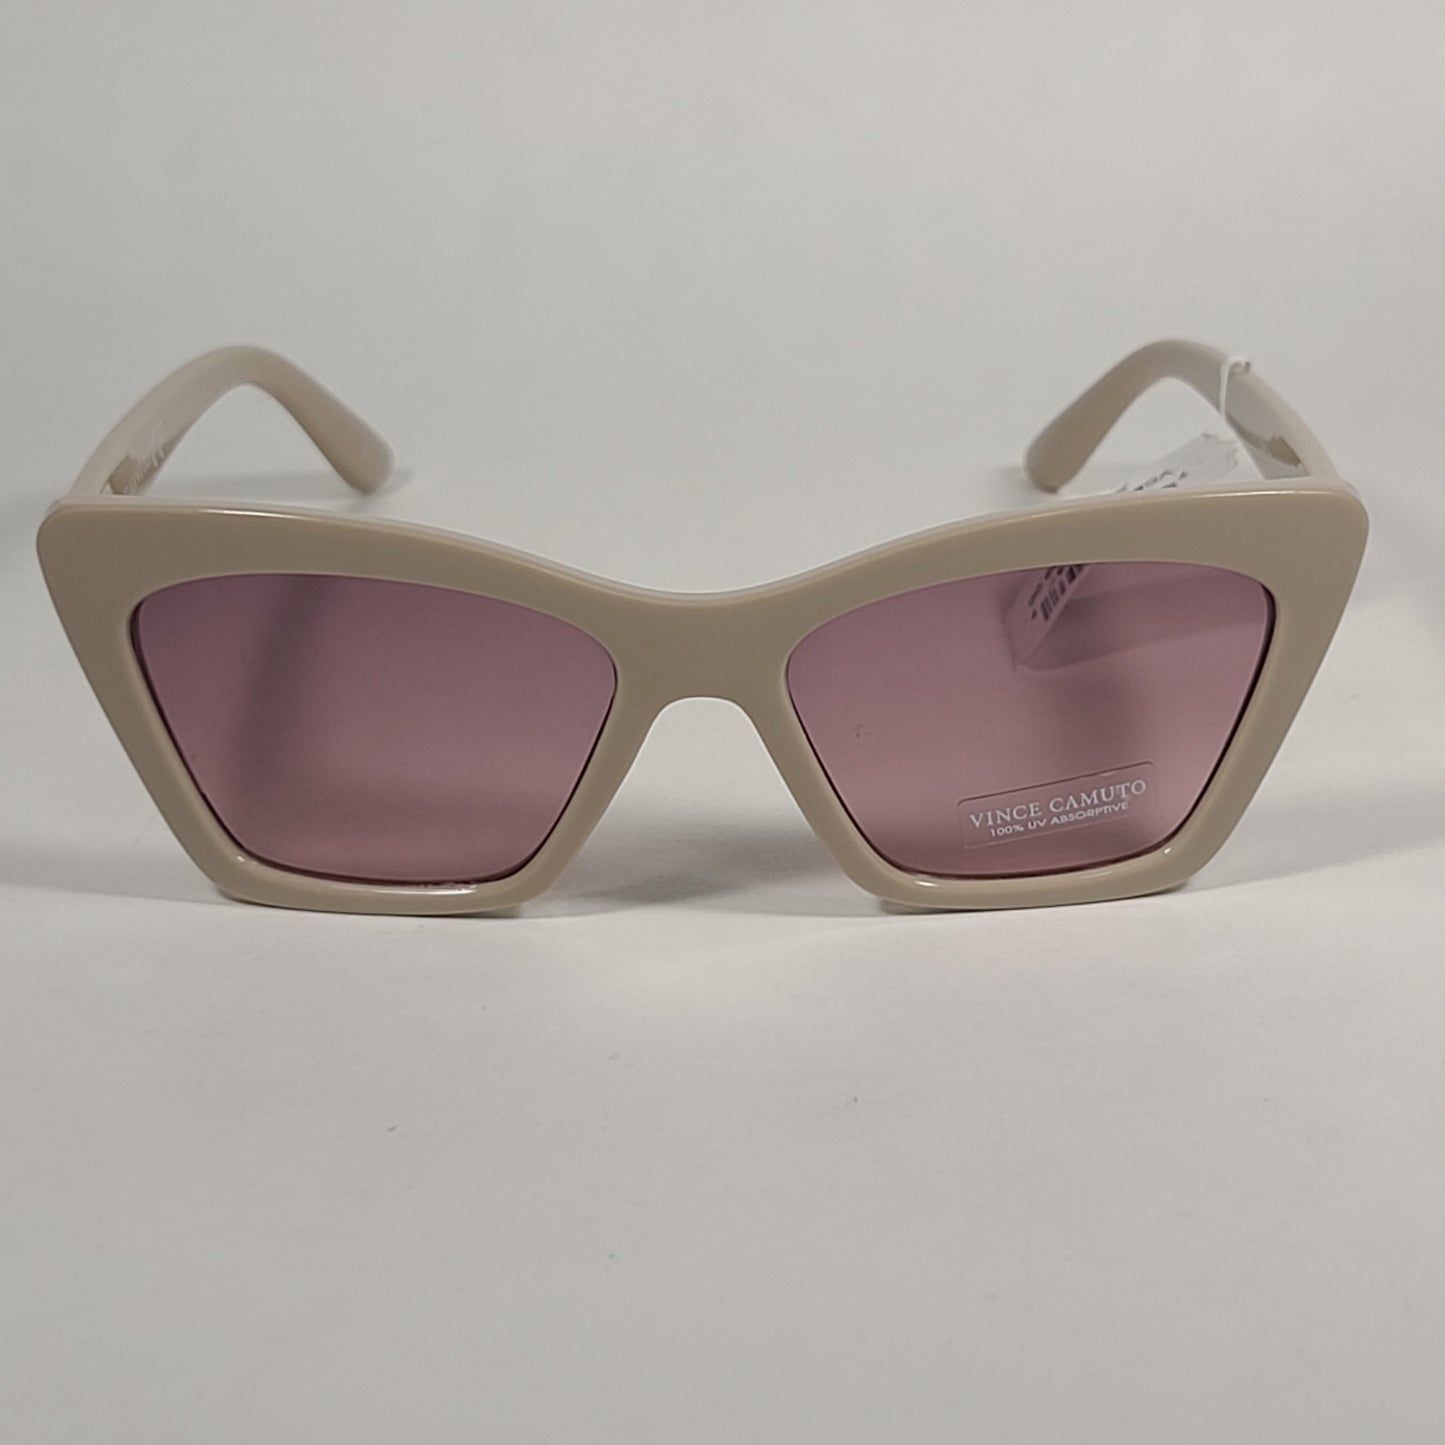 Vince Camuto Cat Eye Sunglasses Tan Nude Frame Light Pink Lens VC899 ND - Sunglasses